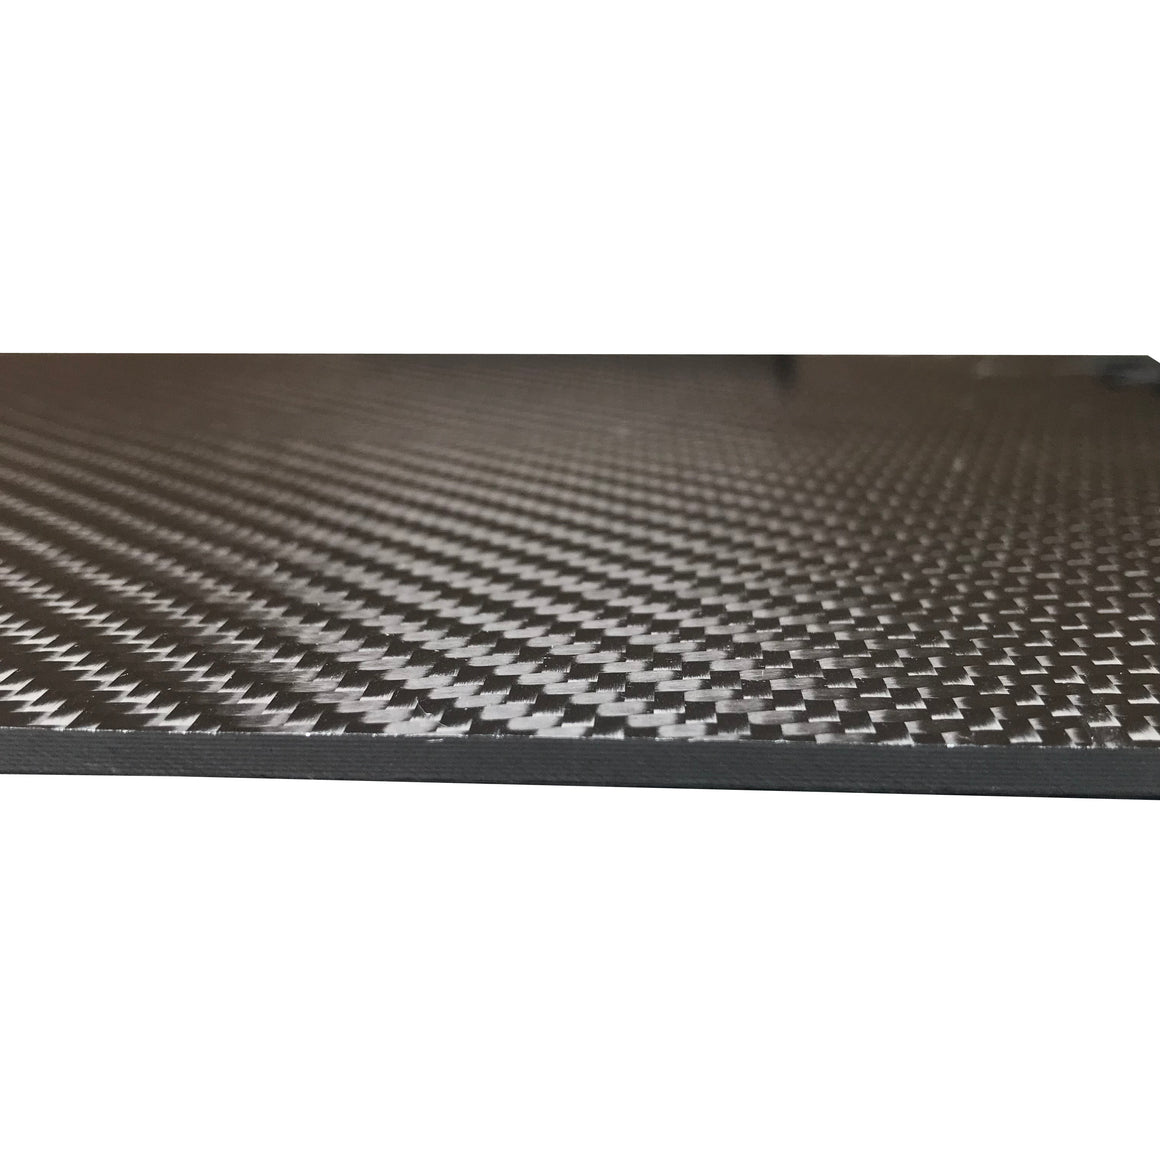 Carbon Fiber Plating  - 100mm x 250mm x 2mm - 3K Carbon Fiber Plate High Gloss Finish